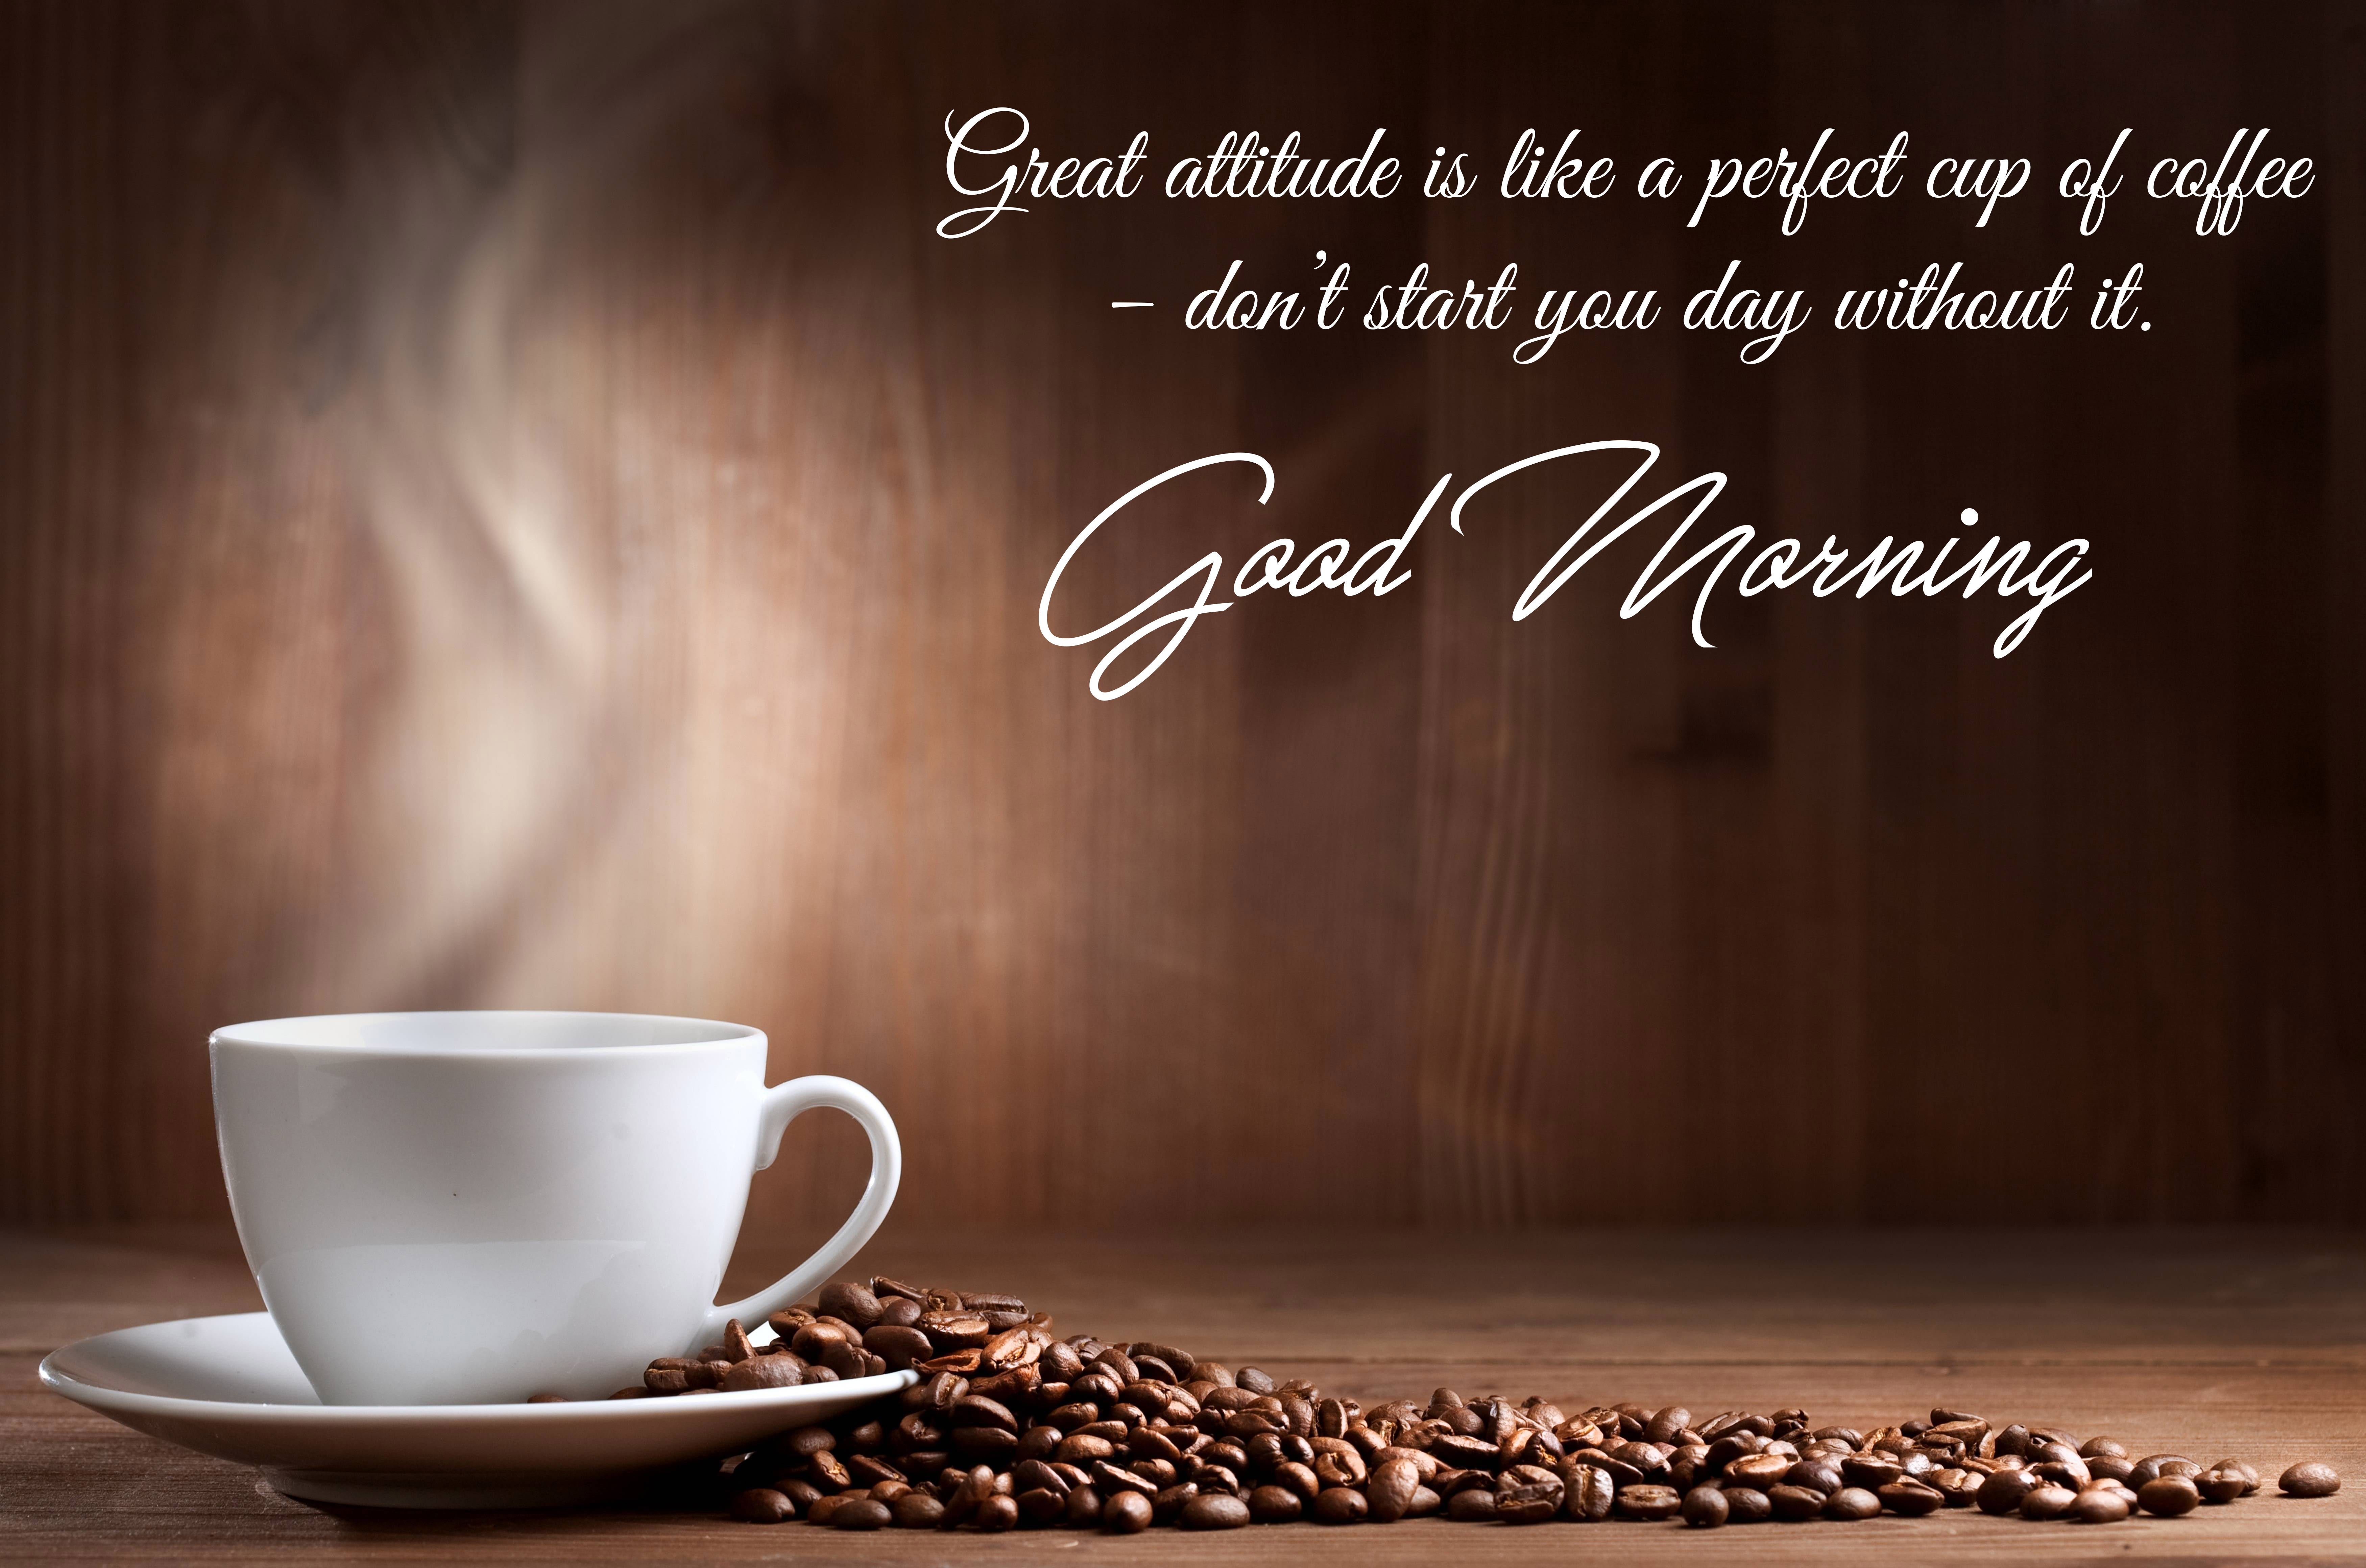 Cup of Tea Good Morning Message Wallpaper 